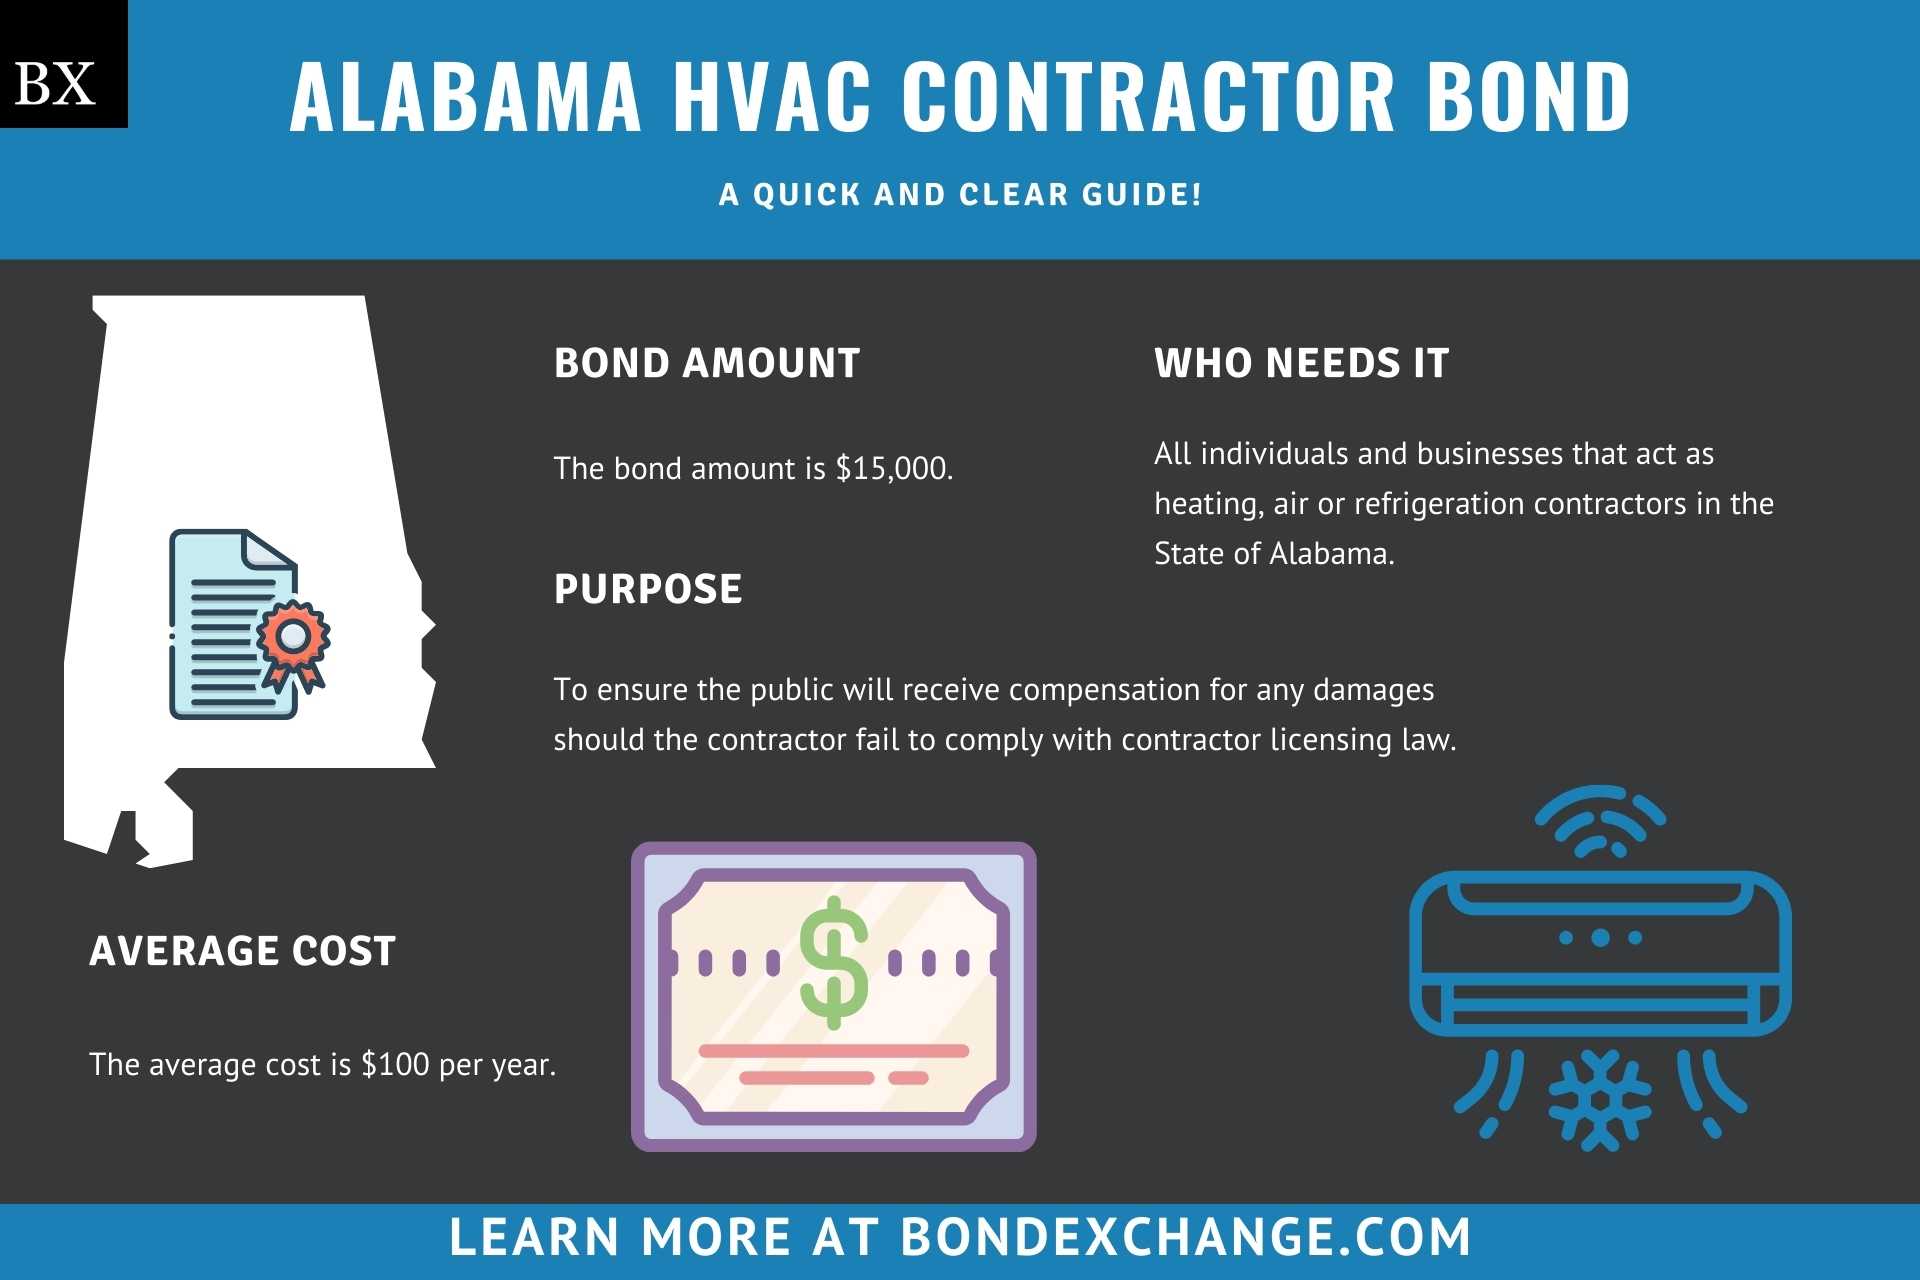 Alabama HVAC Contractor Bond